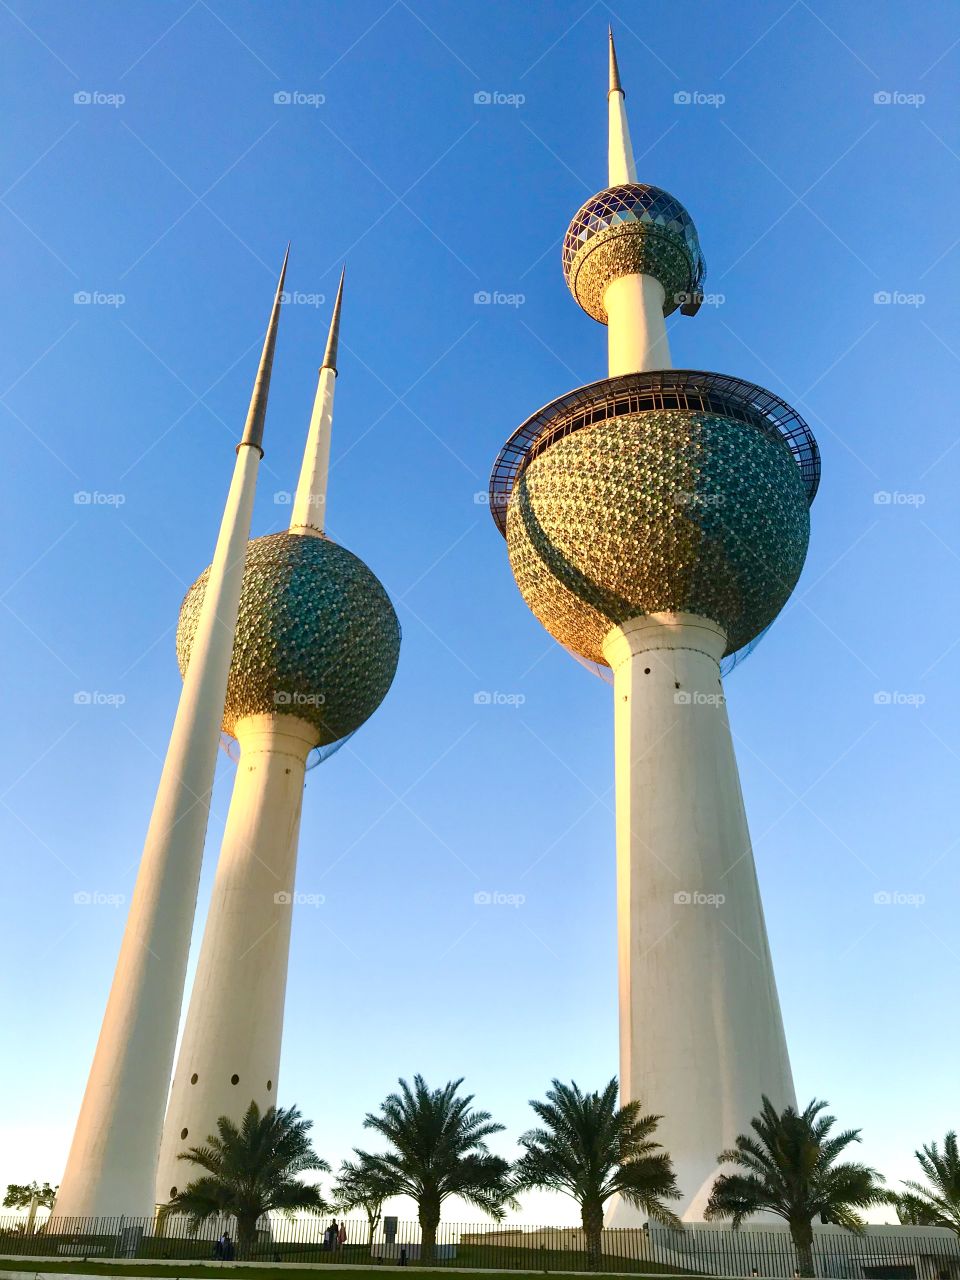 Majestic kuwait towers, amazing landmark in middle east